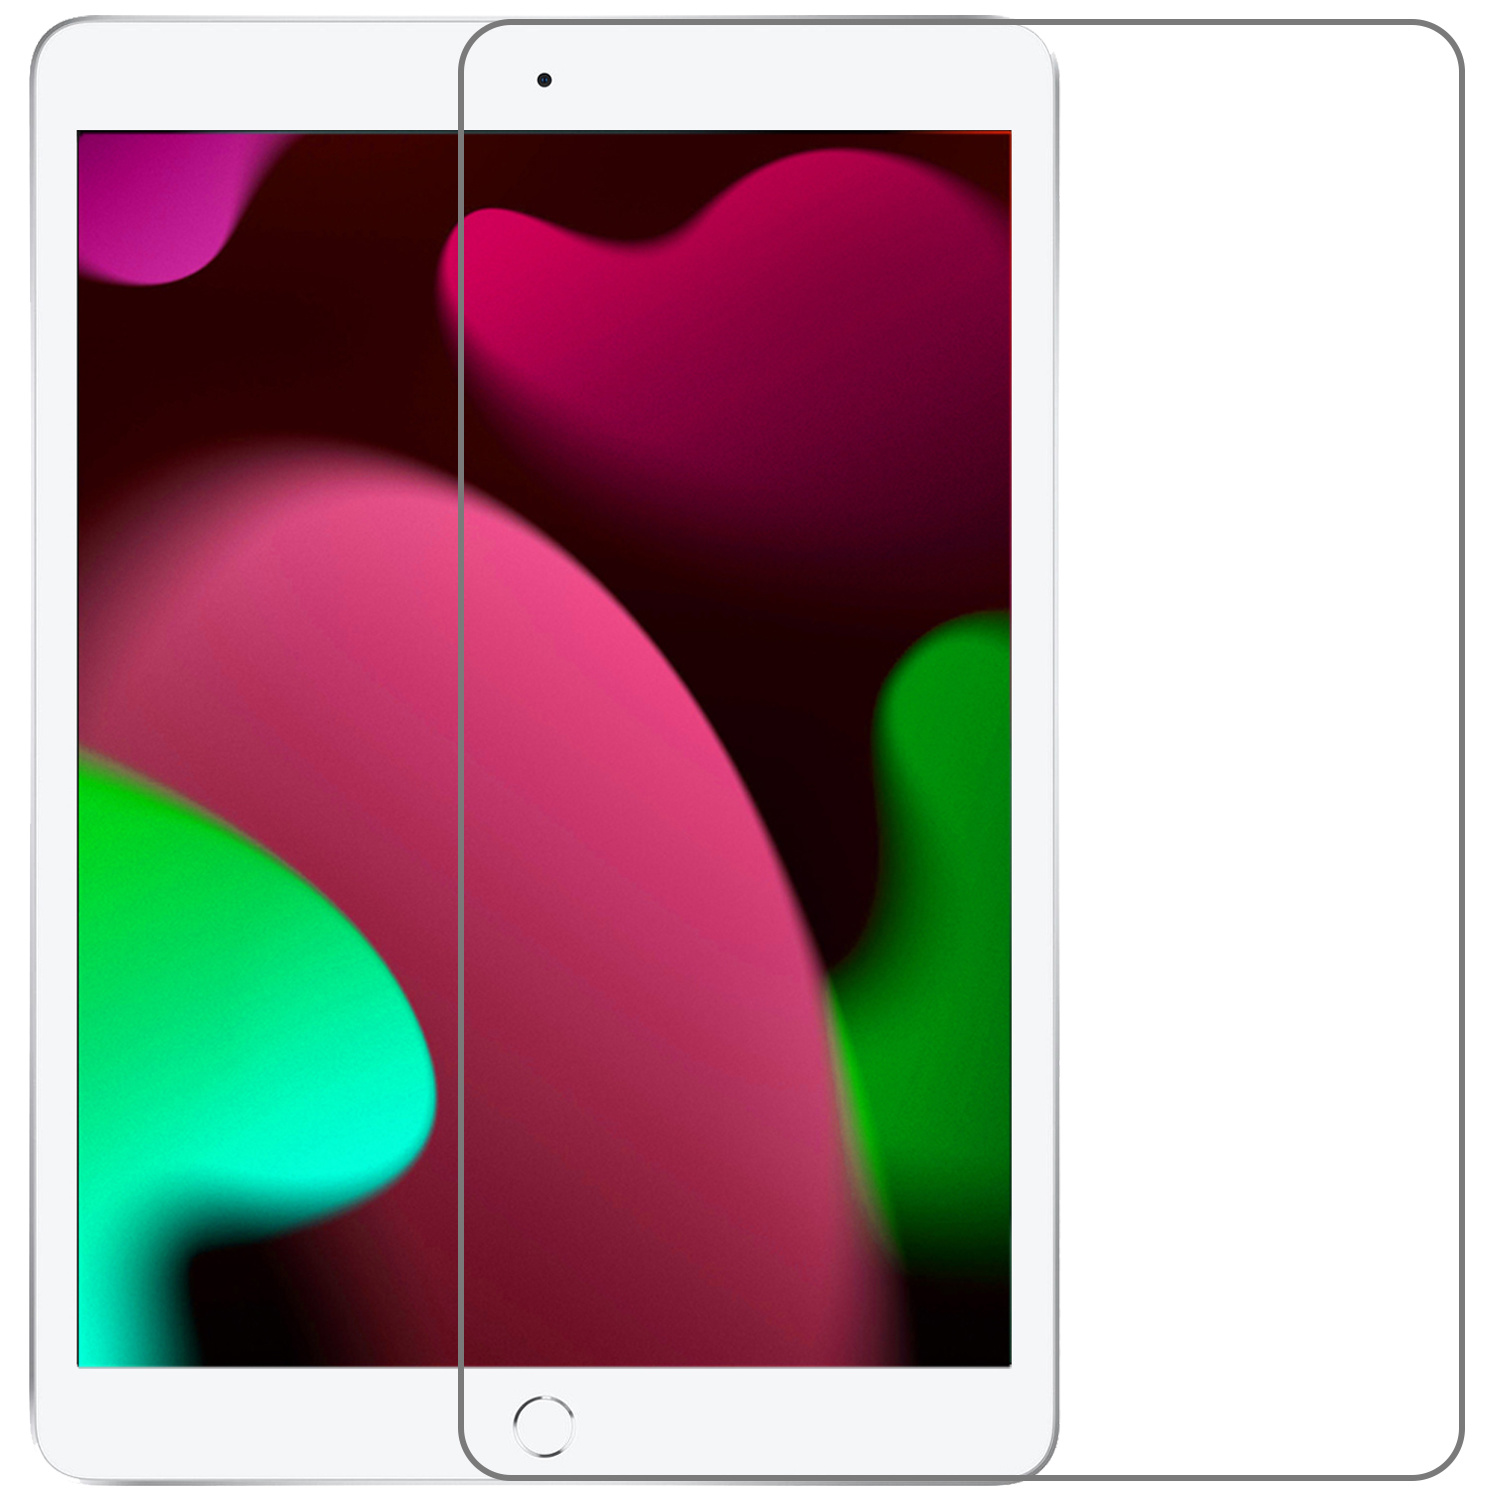 Nomfy iPad 9 Screenprotector Bescherm Glas - iPad 9 Screen Protector Tempered Glass - 2 Stuks